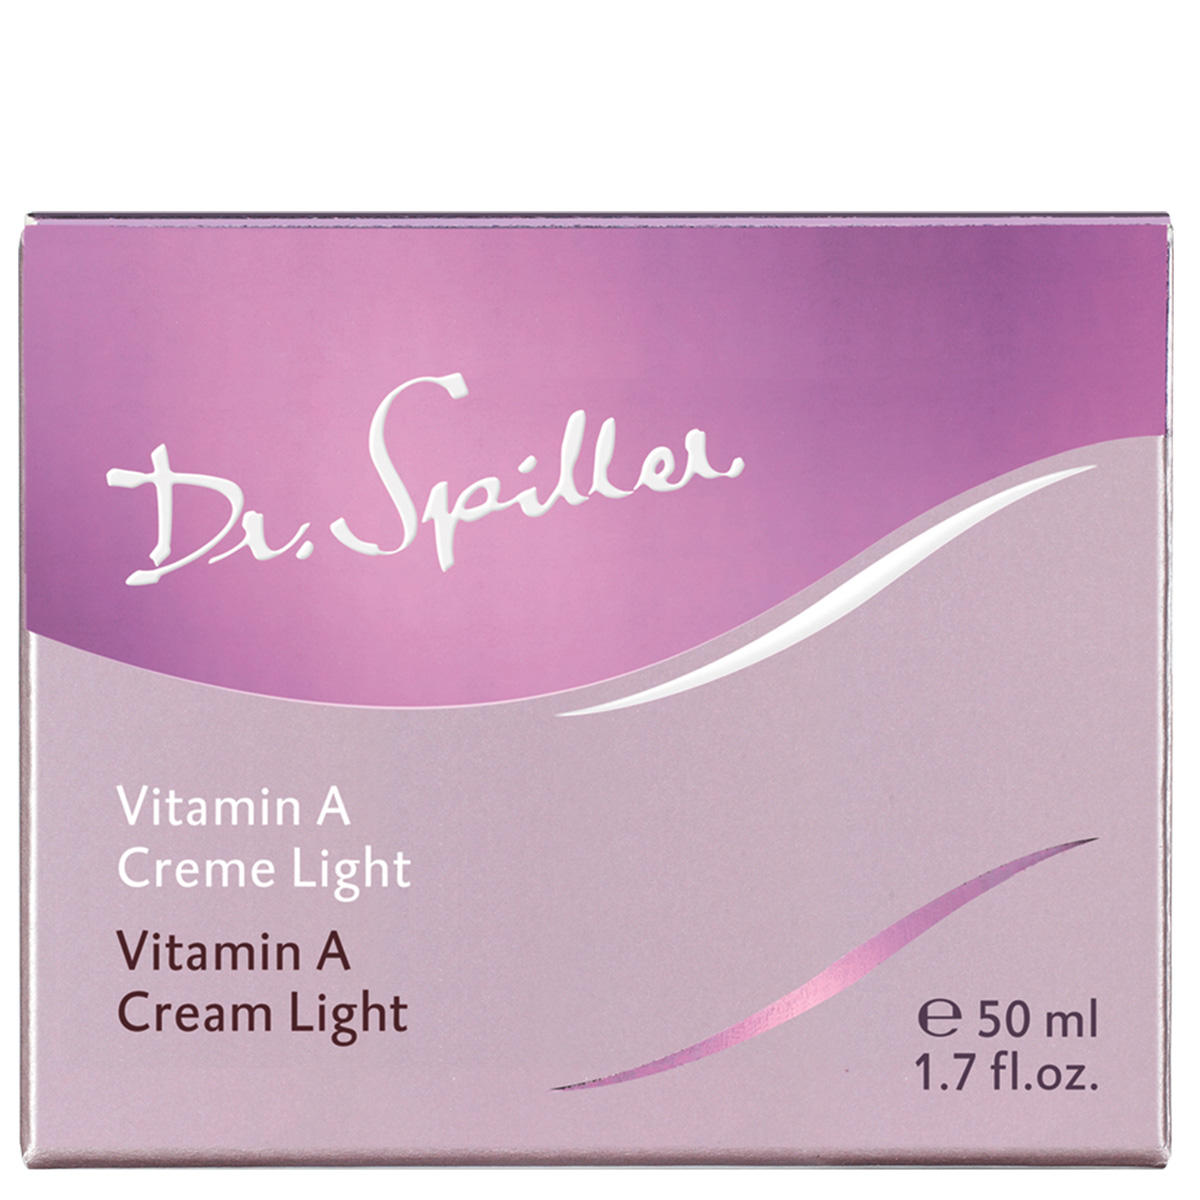 Dr. Spiller Biomimetic SkinCare Vitamin A Creme Light 50 ml - 3